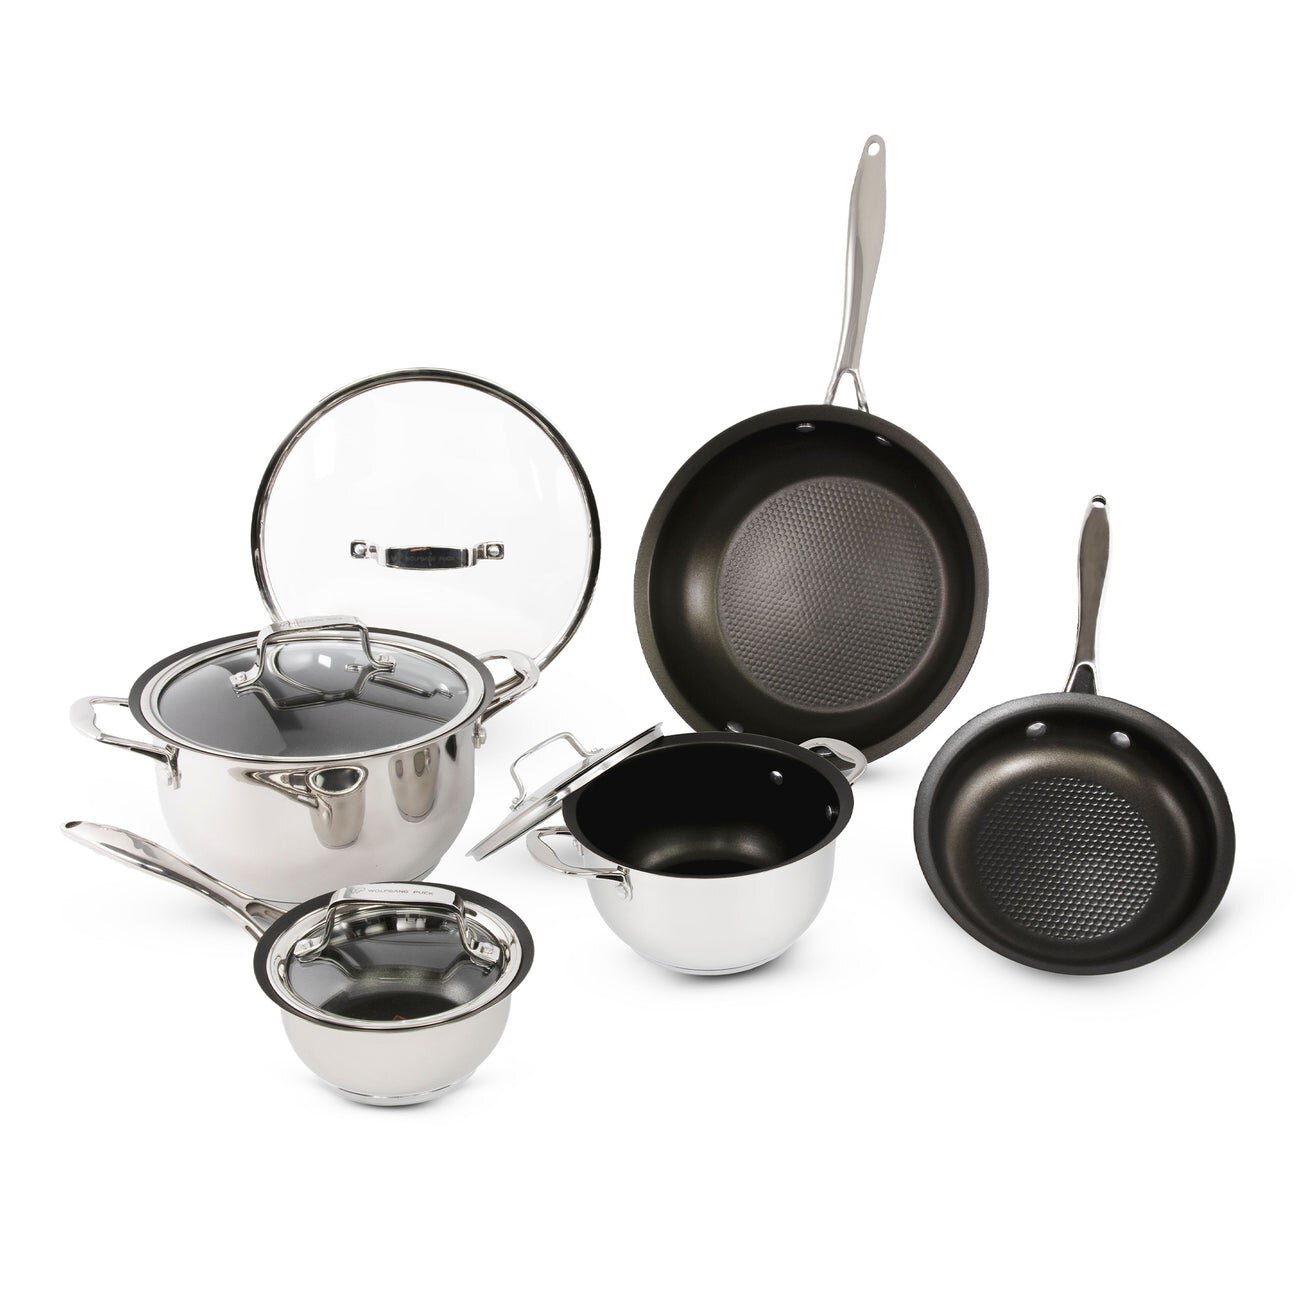 Merten & Storck Stainless Steel 14-Piece Cookware Set